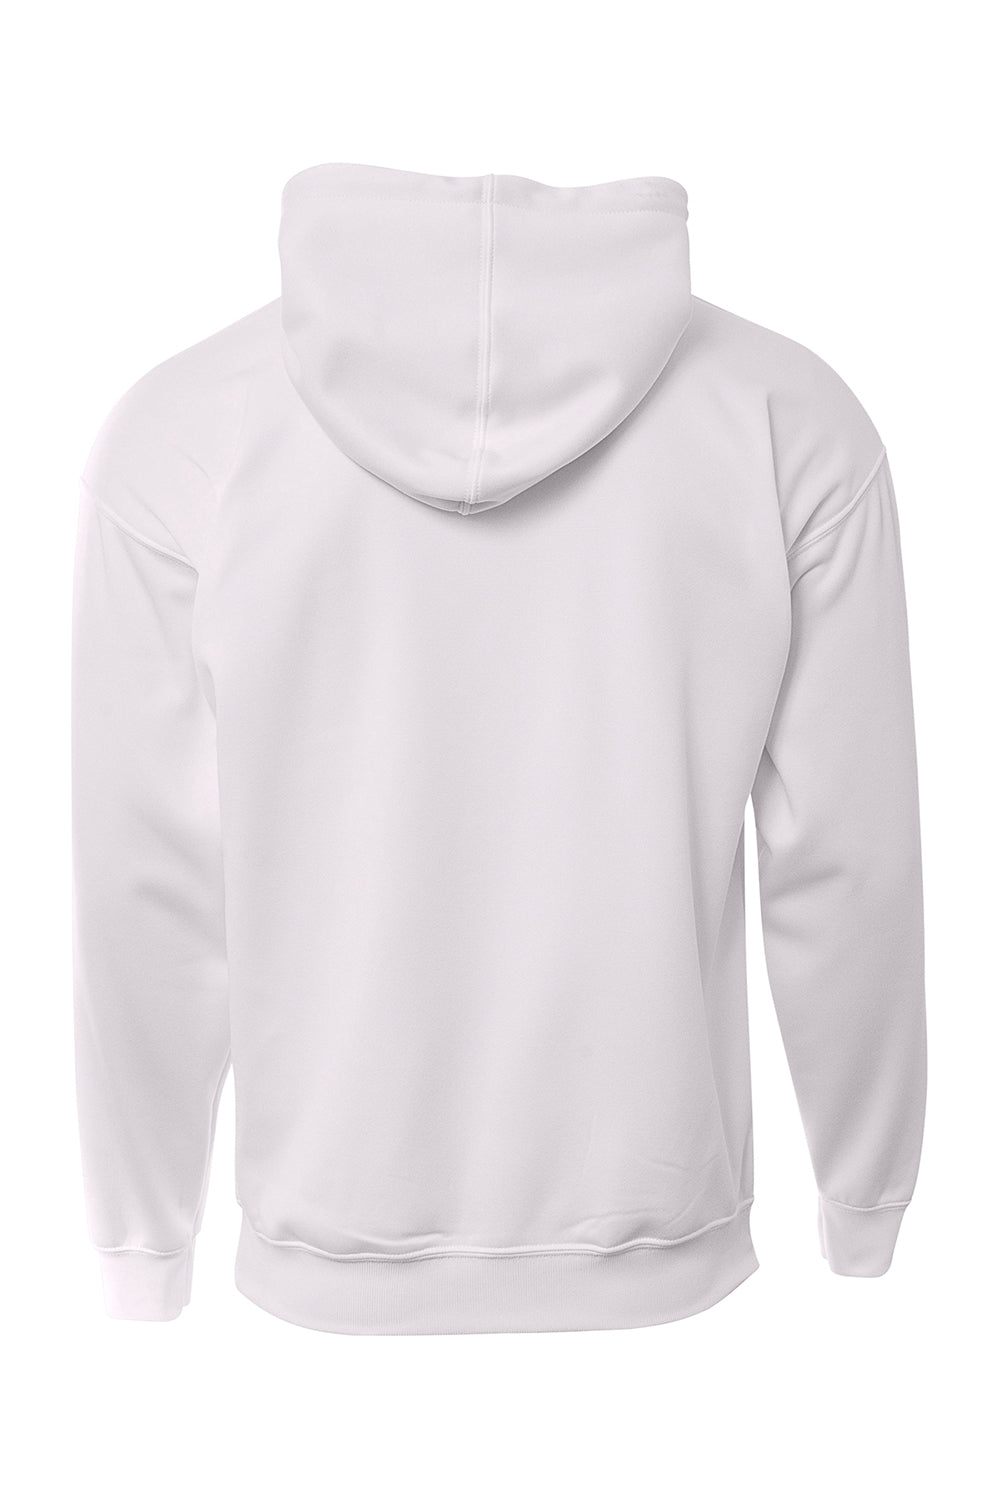 A4 N4279 Mens Sprint Tech Fleece Hooded Sweatshirt White Flat Back